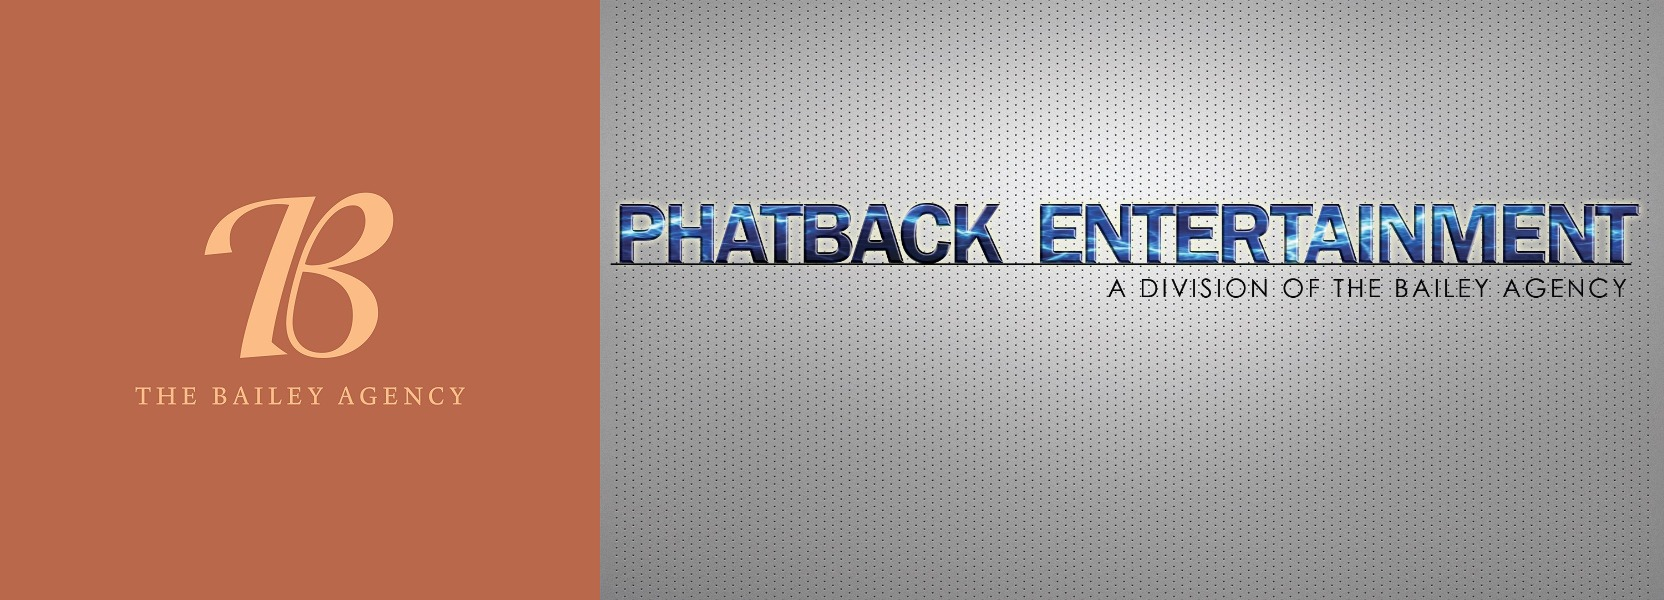 The Bailey Agency and Phatback Entertainment'